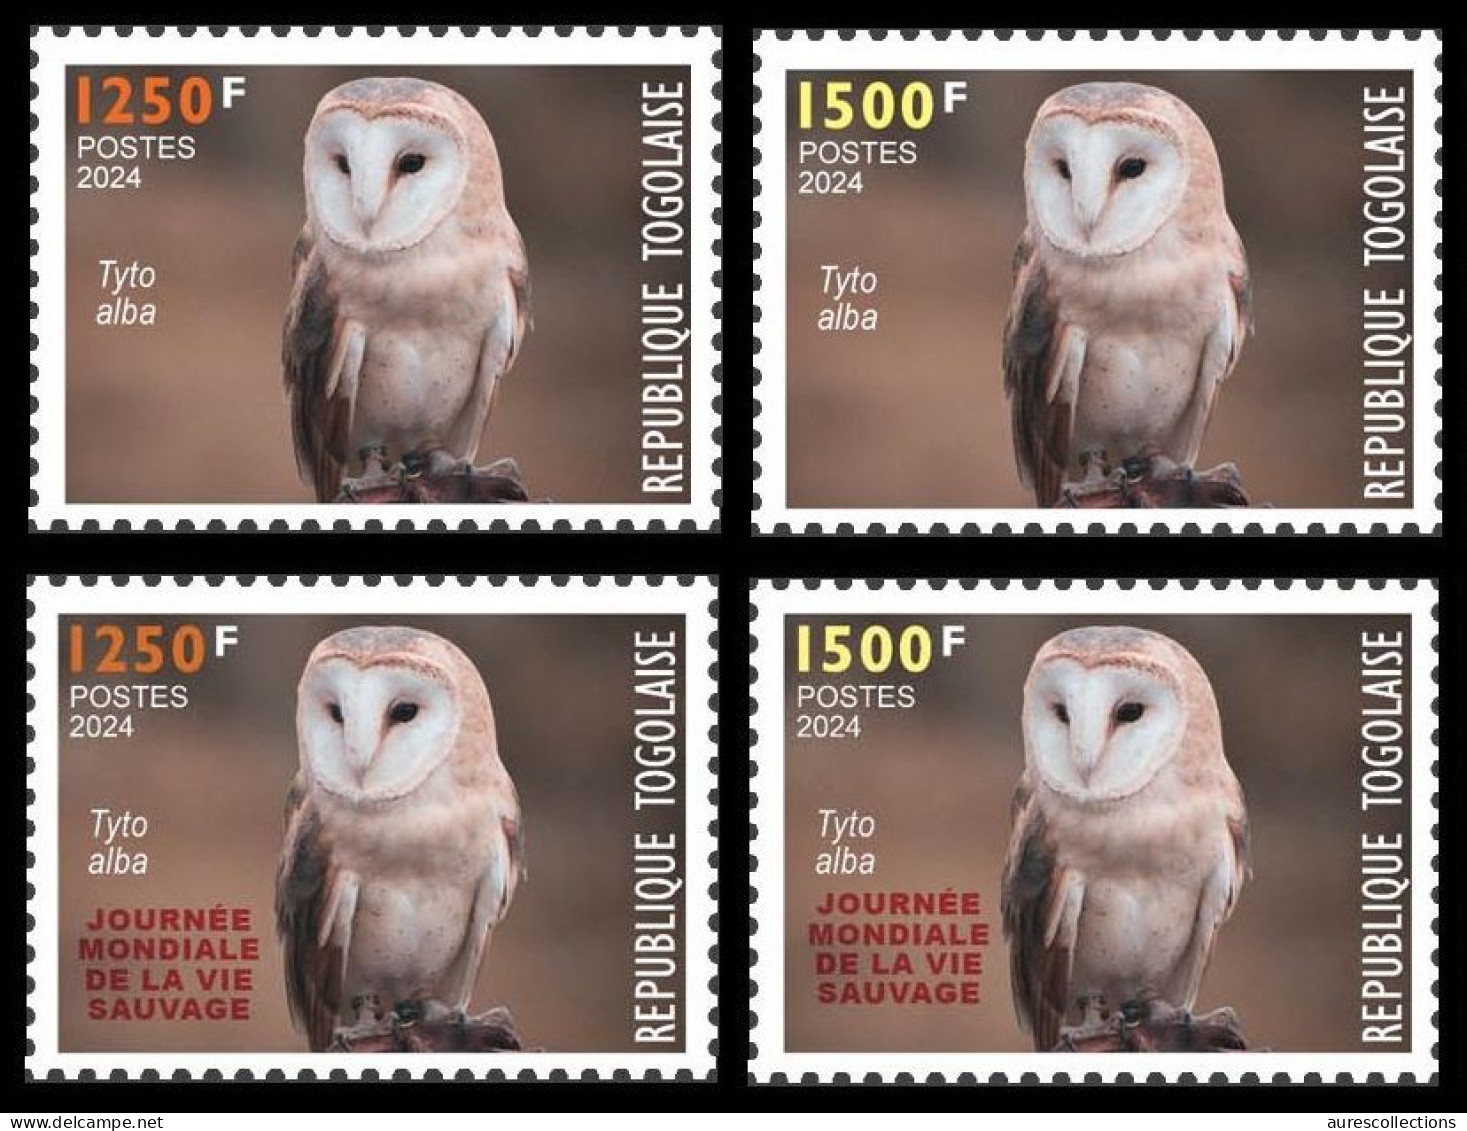 TOGO 2024 SET 4V - REGULAR & OVERPRINT - OWLS OWL HIBOU HIBOUX BIRDS OISEAUX - BIODIVERSITY BIODIVERSITE - MNH - Owls